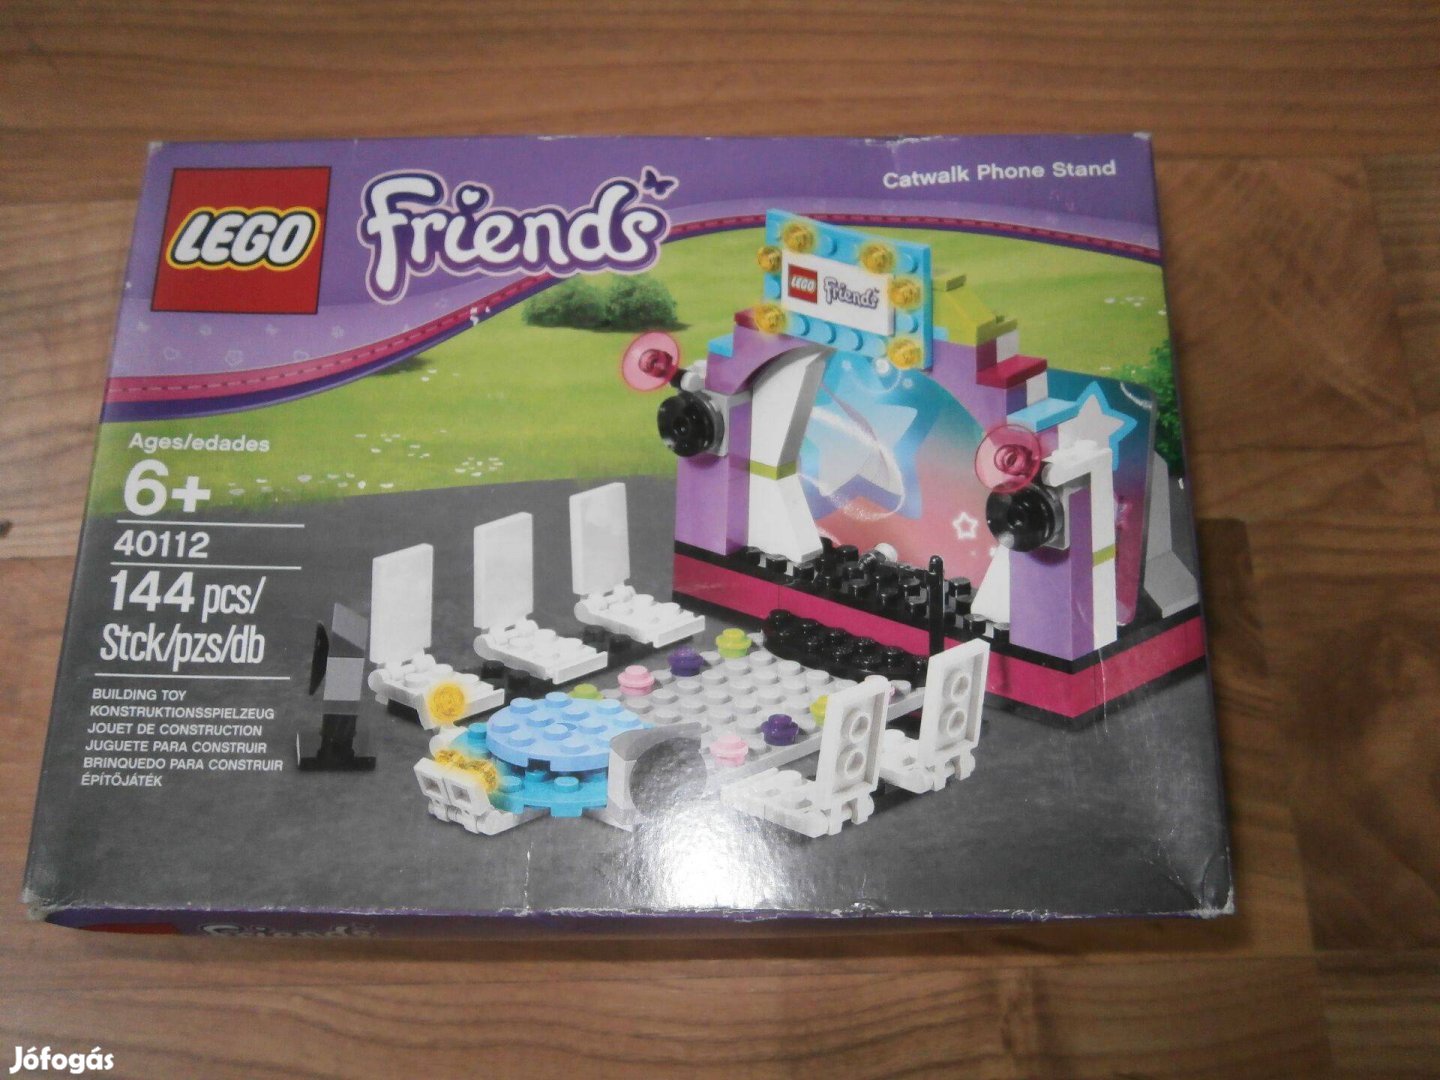 LEGO Friends 40112 Divatbemutató kifutó. Bontatlan